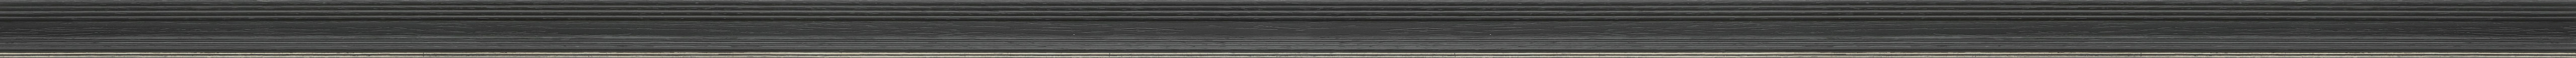 Decape black frame with silver stripe frame